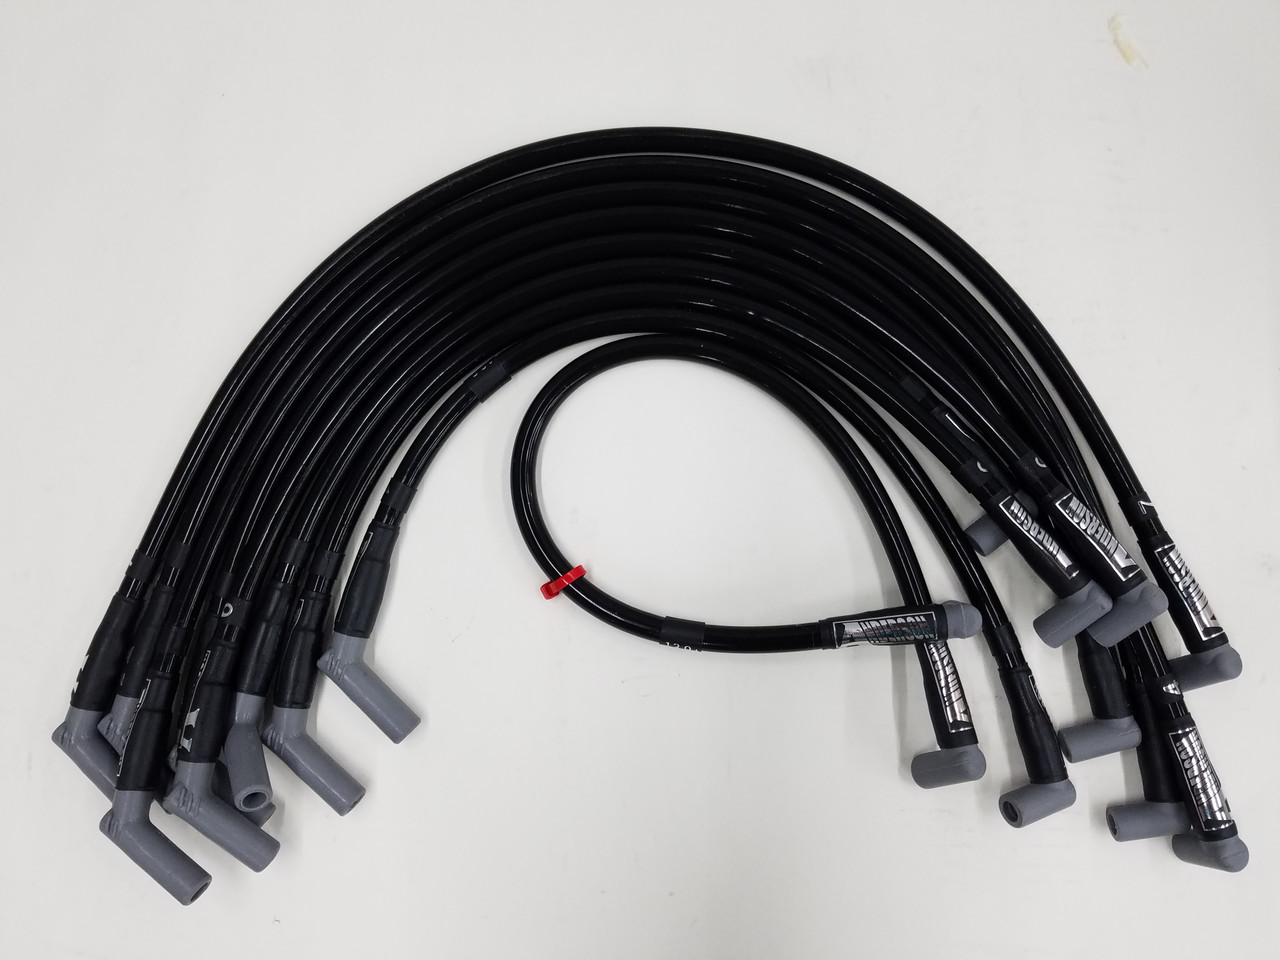 Anderson Super 14 Extreme Spark Plug Wires Black. Fits 86-93 5.0L